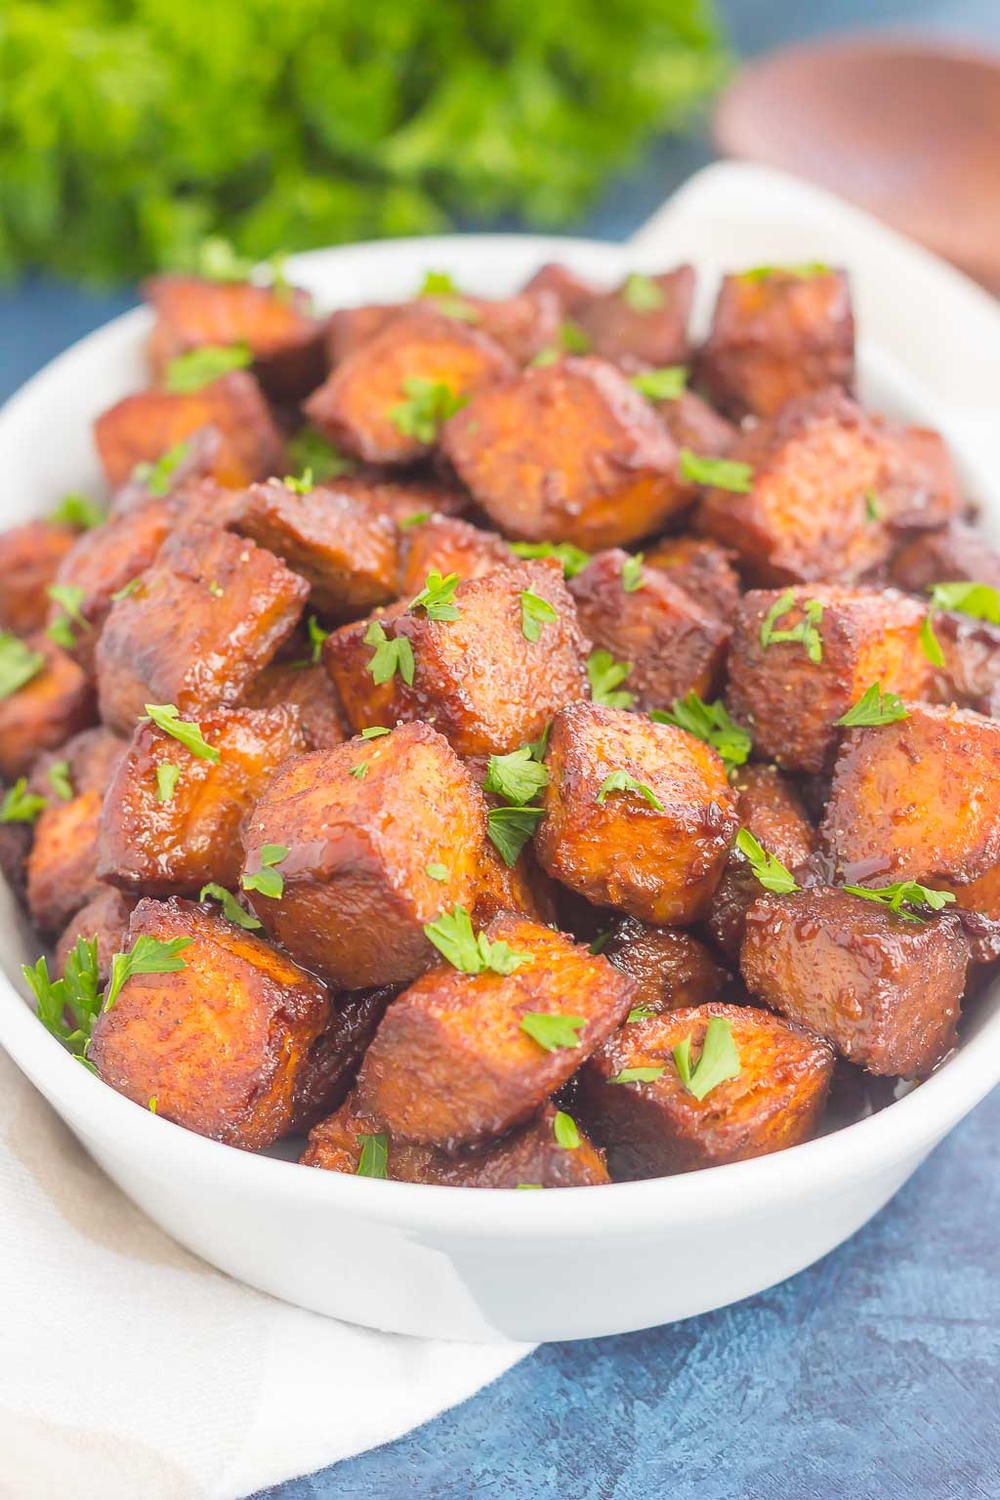 Baking Sweet Potatoes : Roasted Sweet Potatoes with Cinnamon and Honey ...